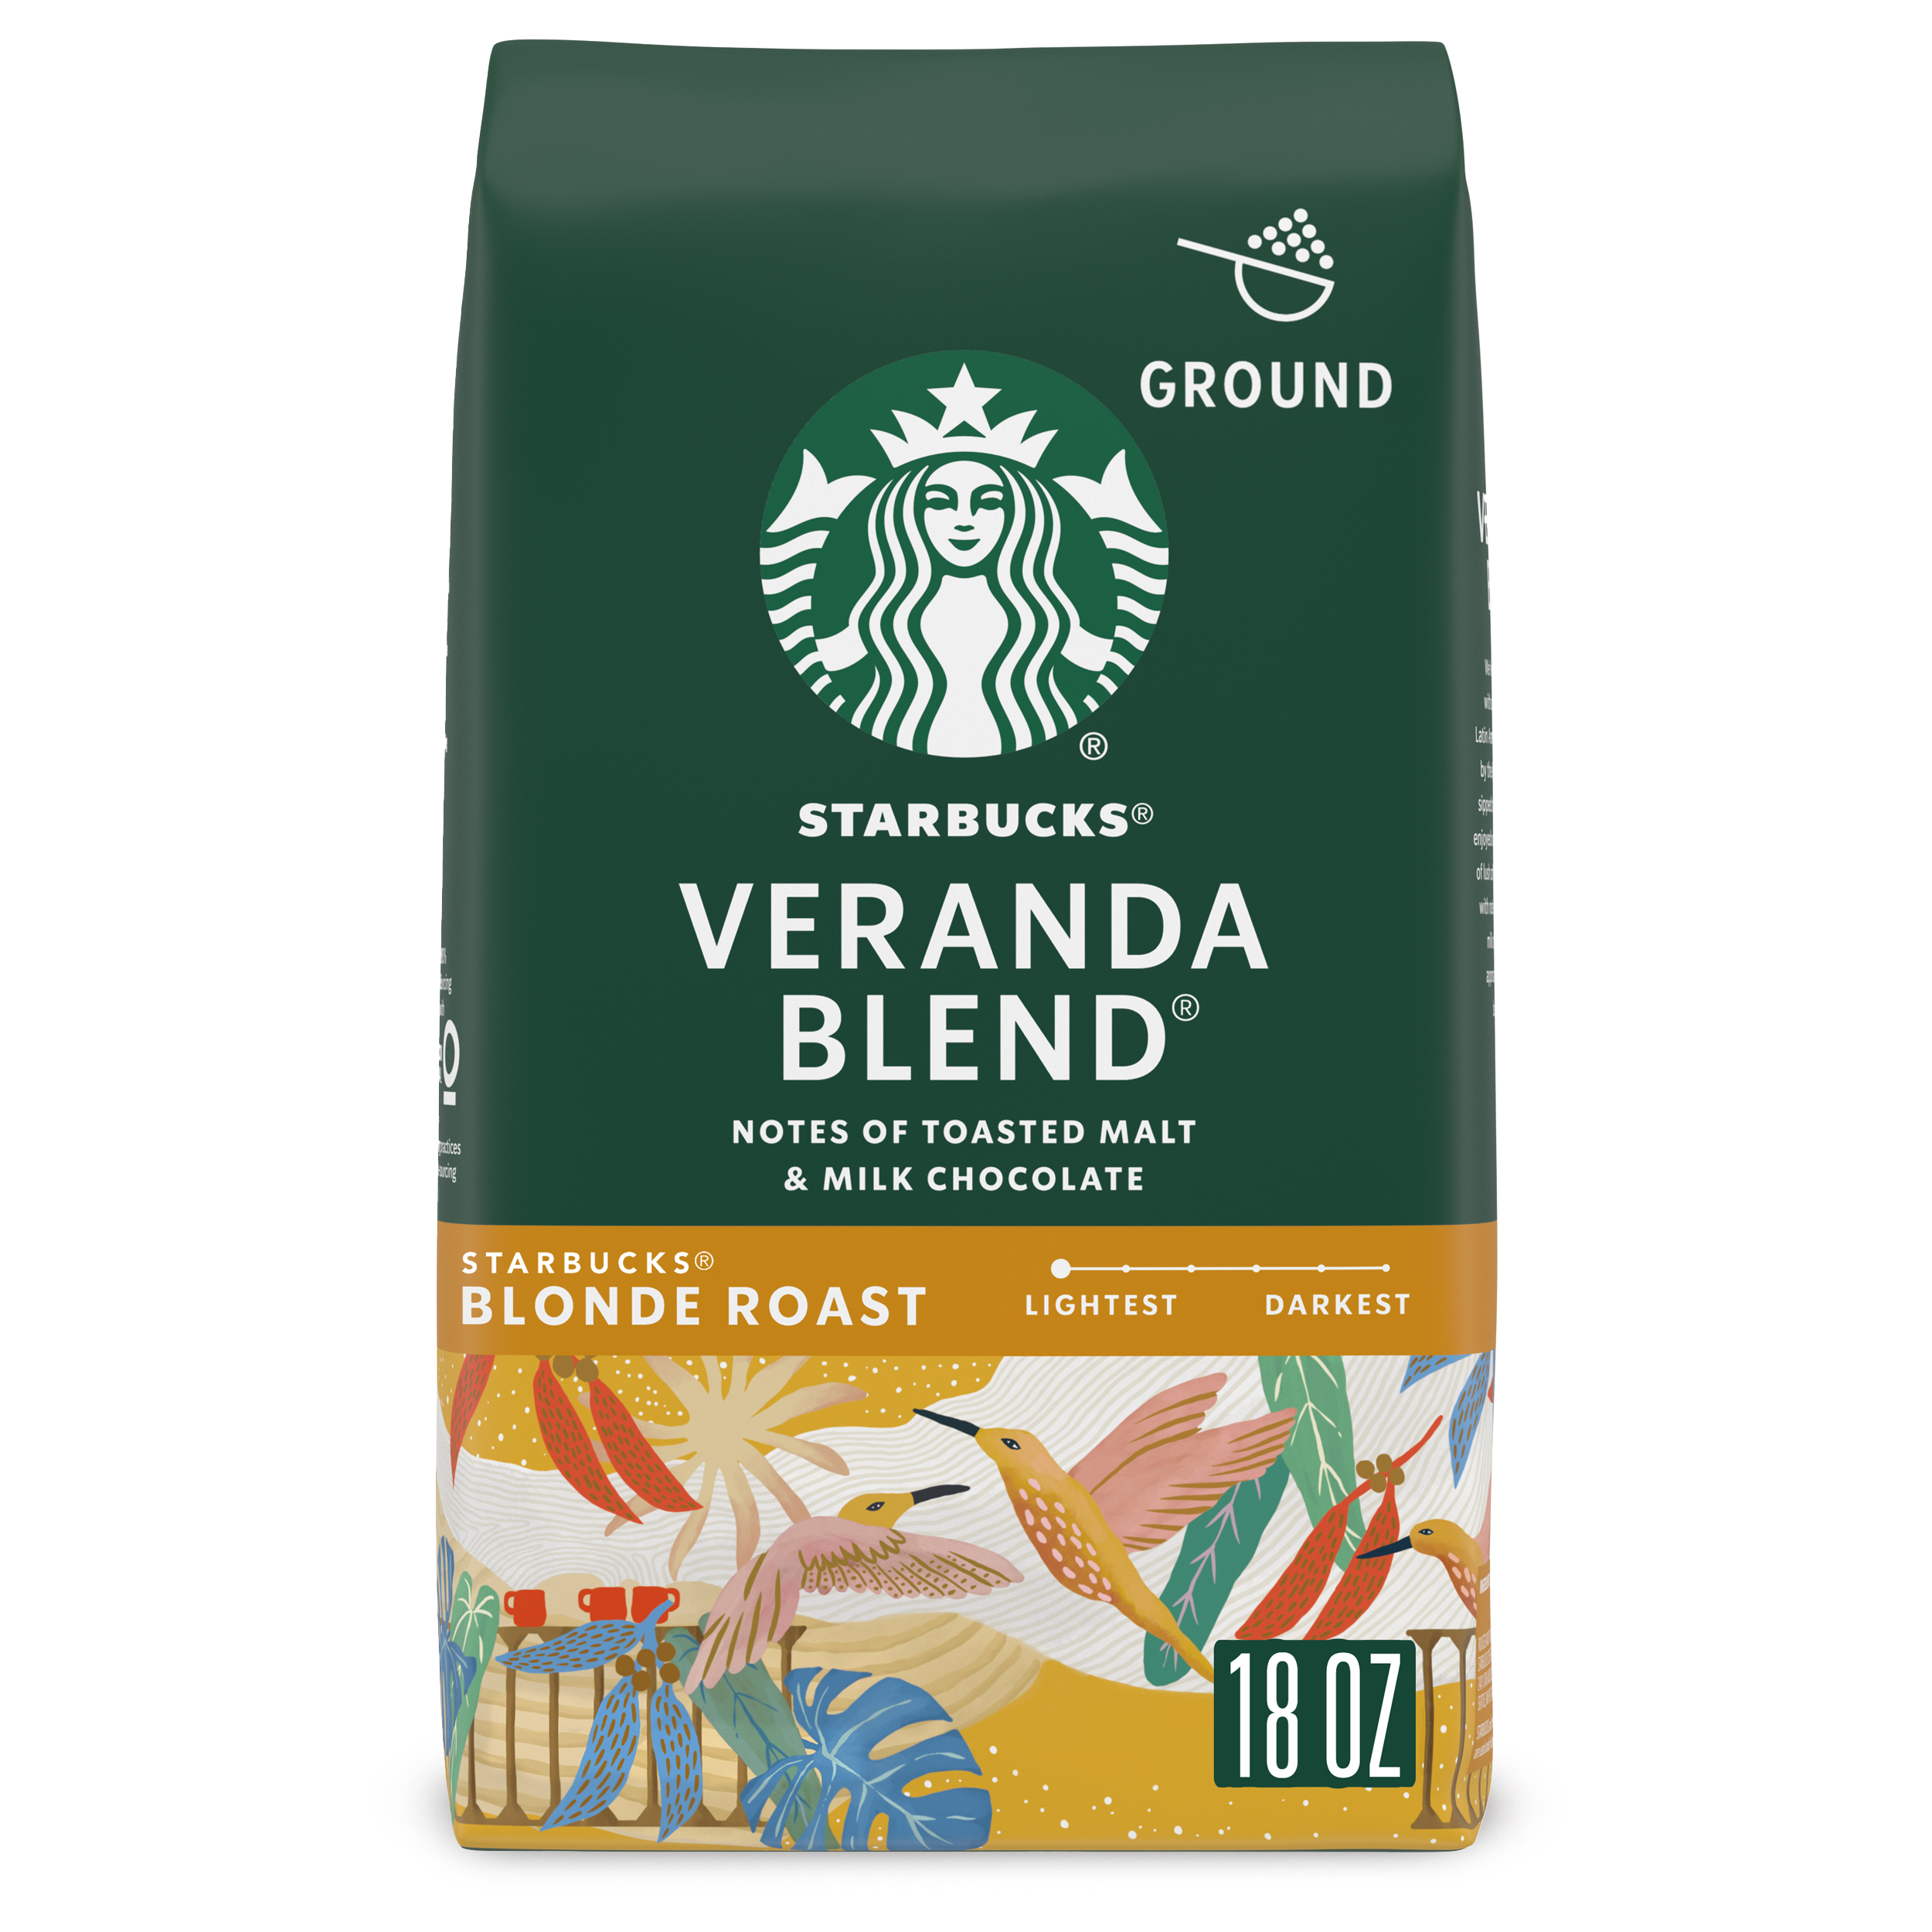 Starbucks Arabica Beans Veranda Blend, Blonde Roast, Ground Coffee, 18 oz - image 1 of 8